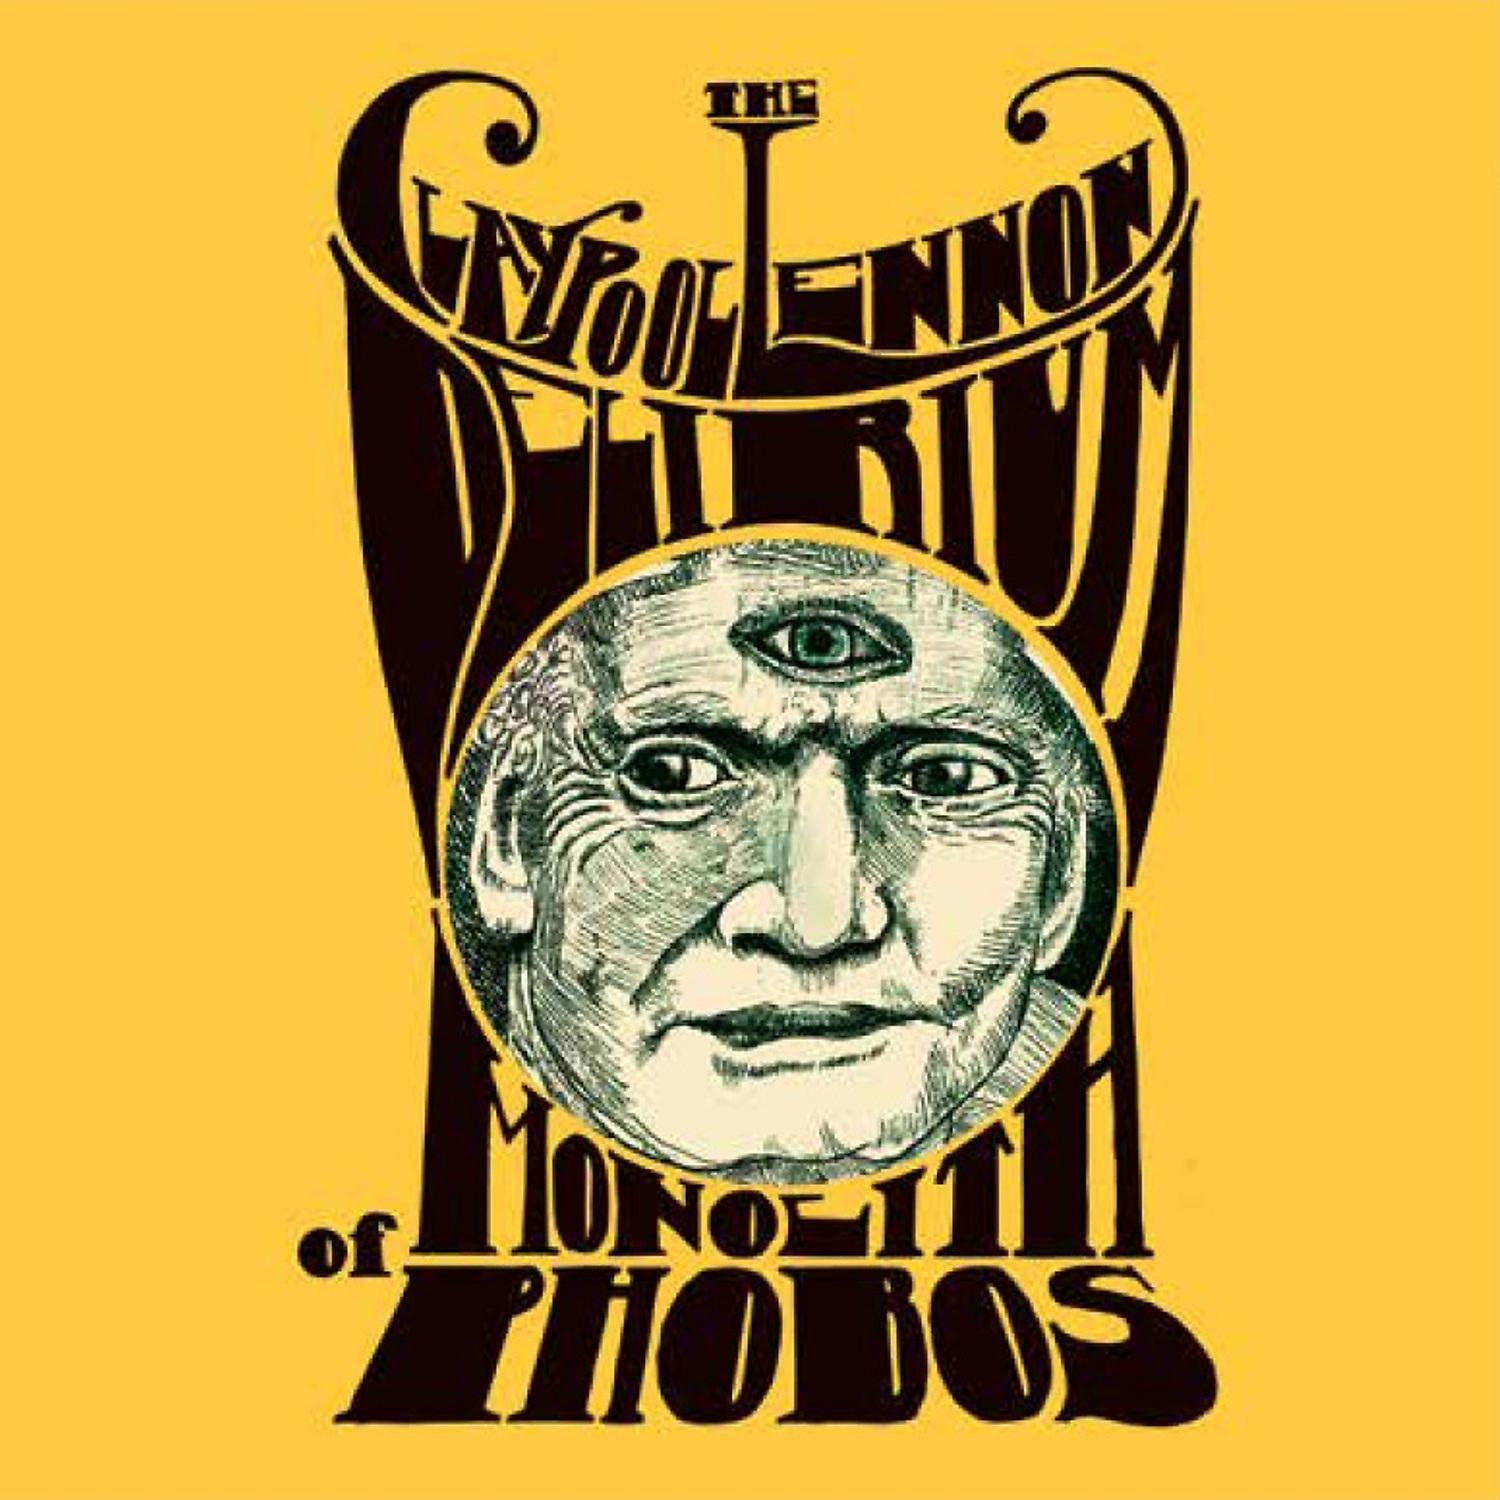 The claypool lennon. Клейпул Леннон Делириум. Monolith of Phobos the Claypool Lennon delirium. Phobos Monolith. Claypool Lennon delirium South of reality.